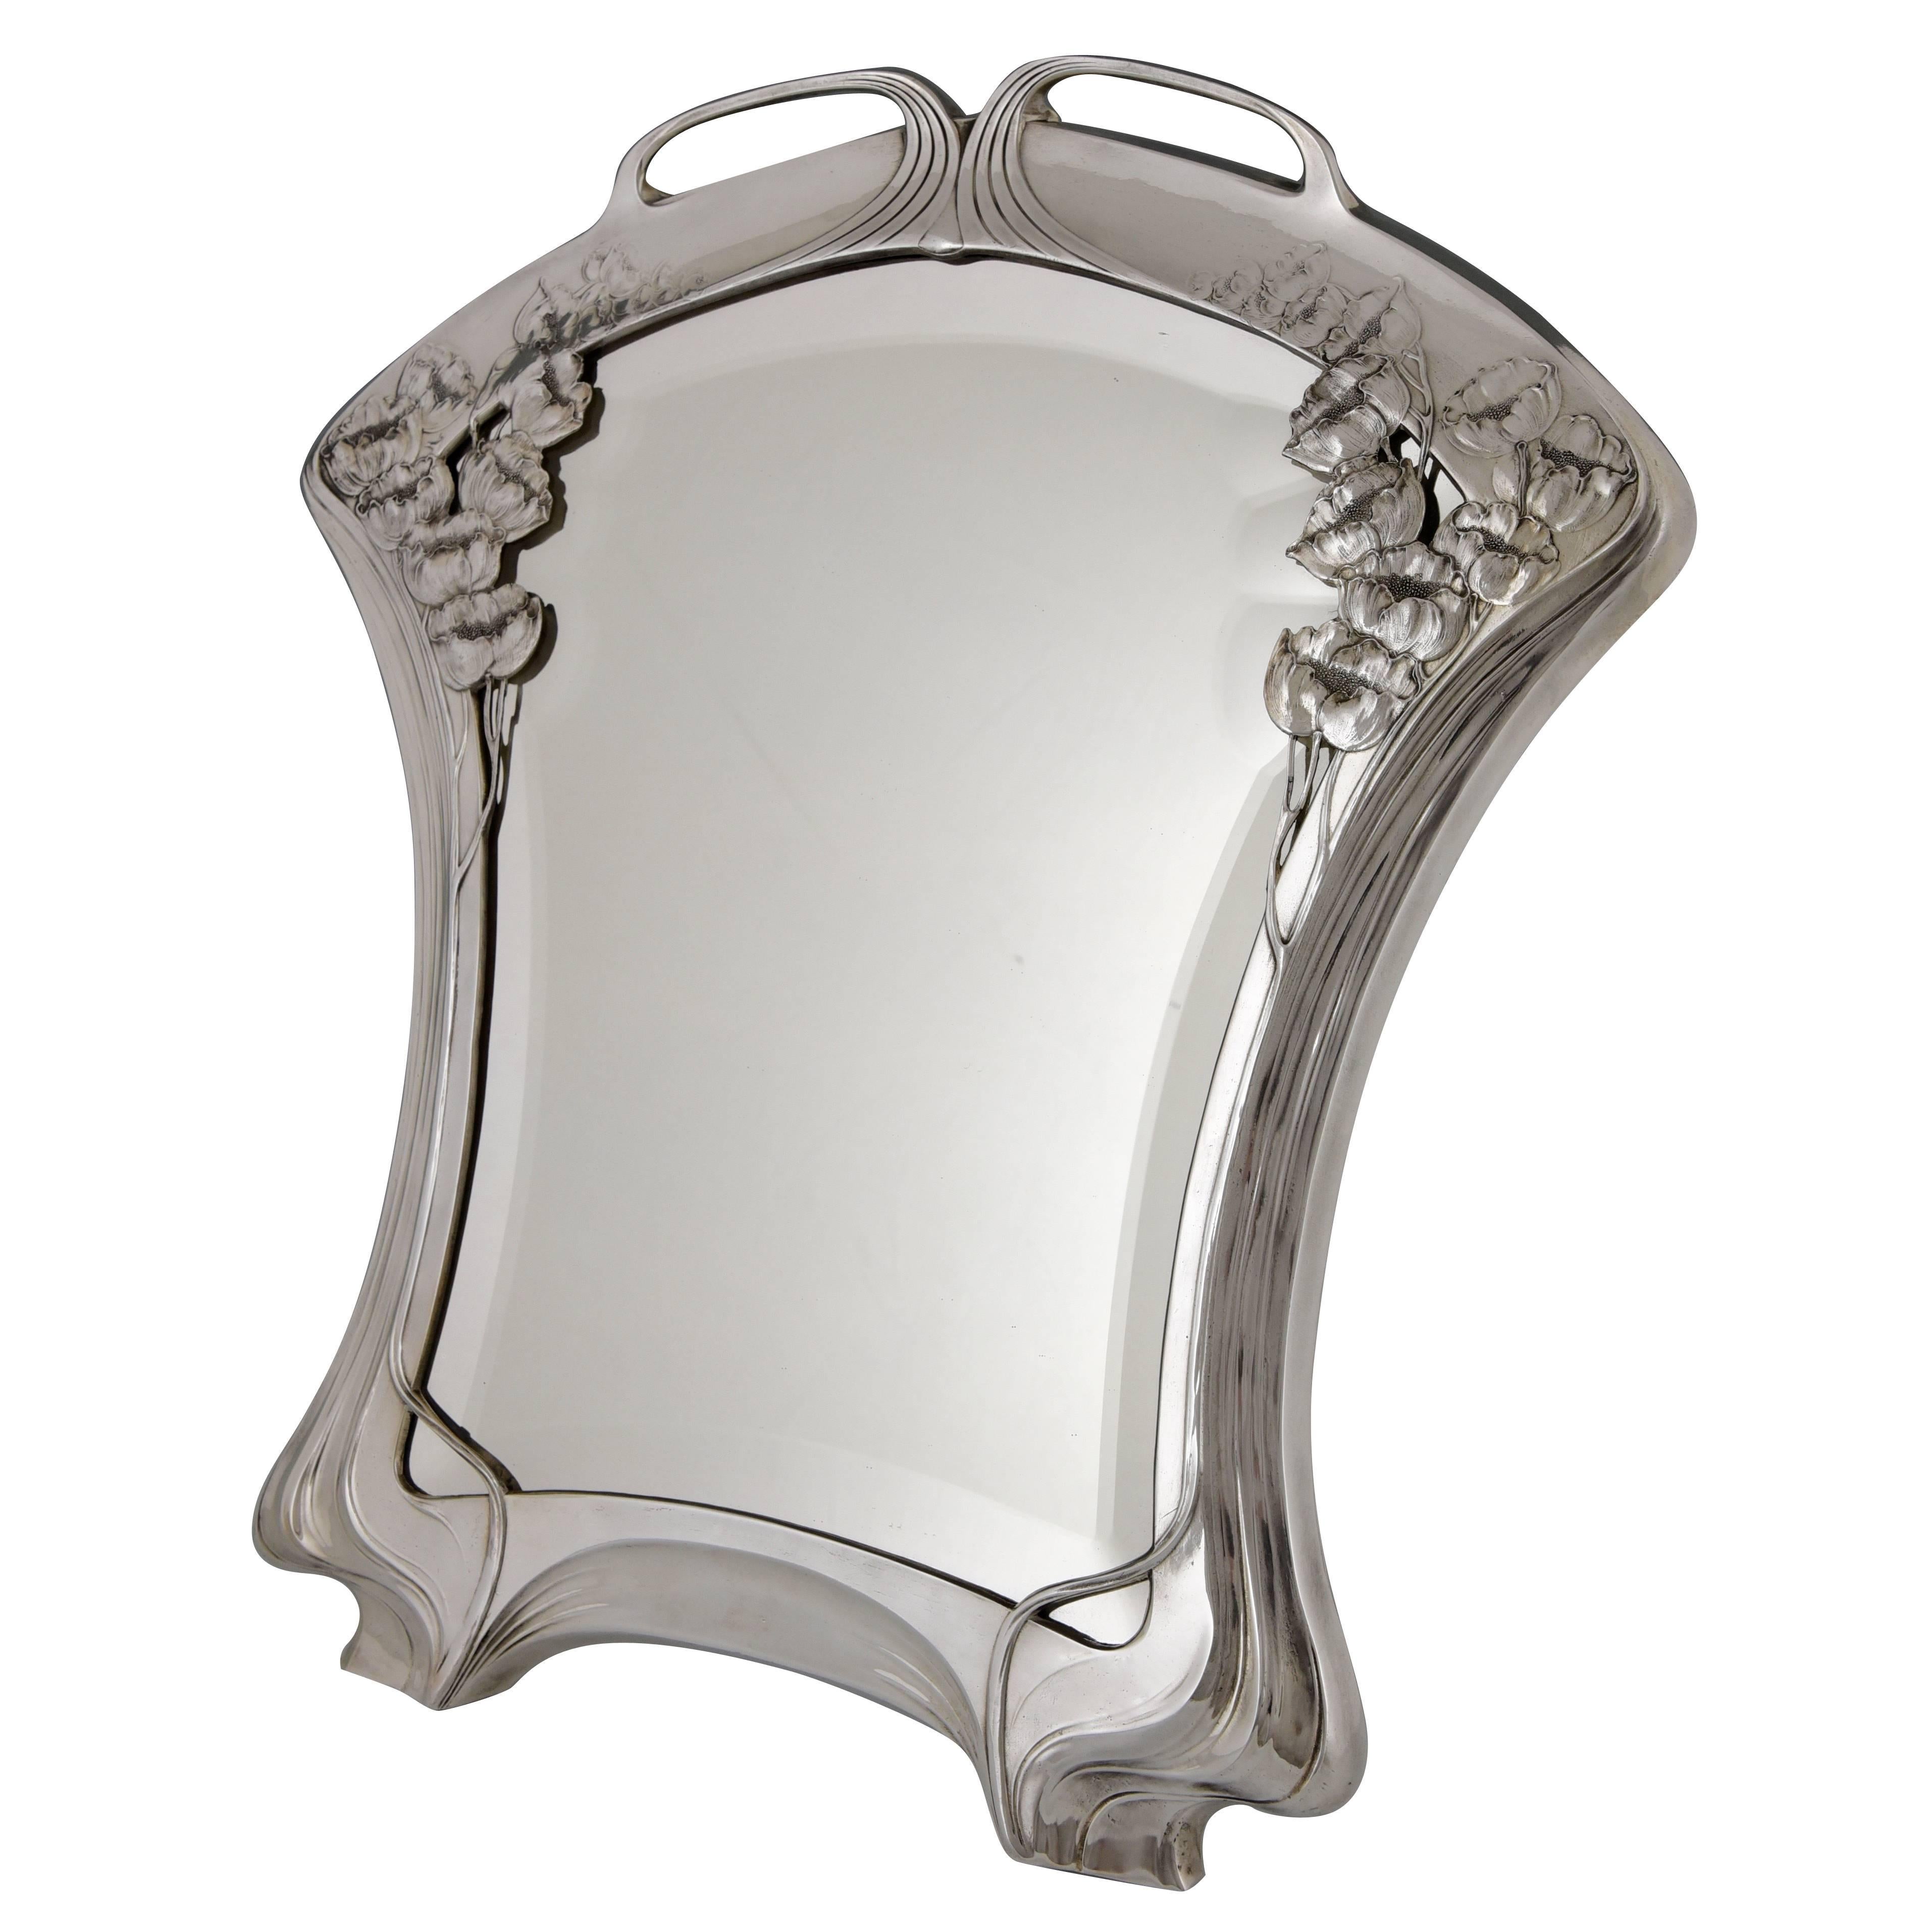 Silvered Art Nouveau mirror by Orivit beveled glass, Germany 1904.